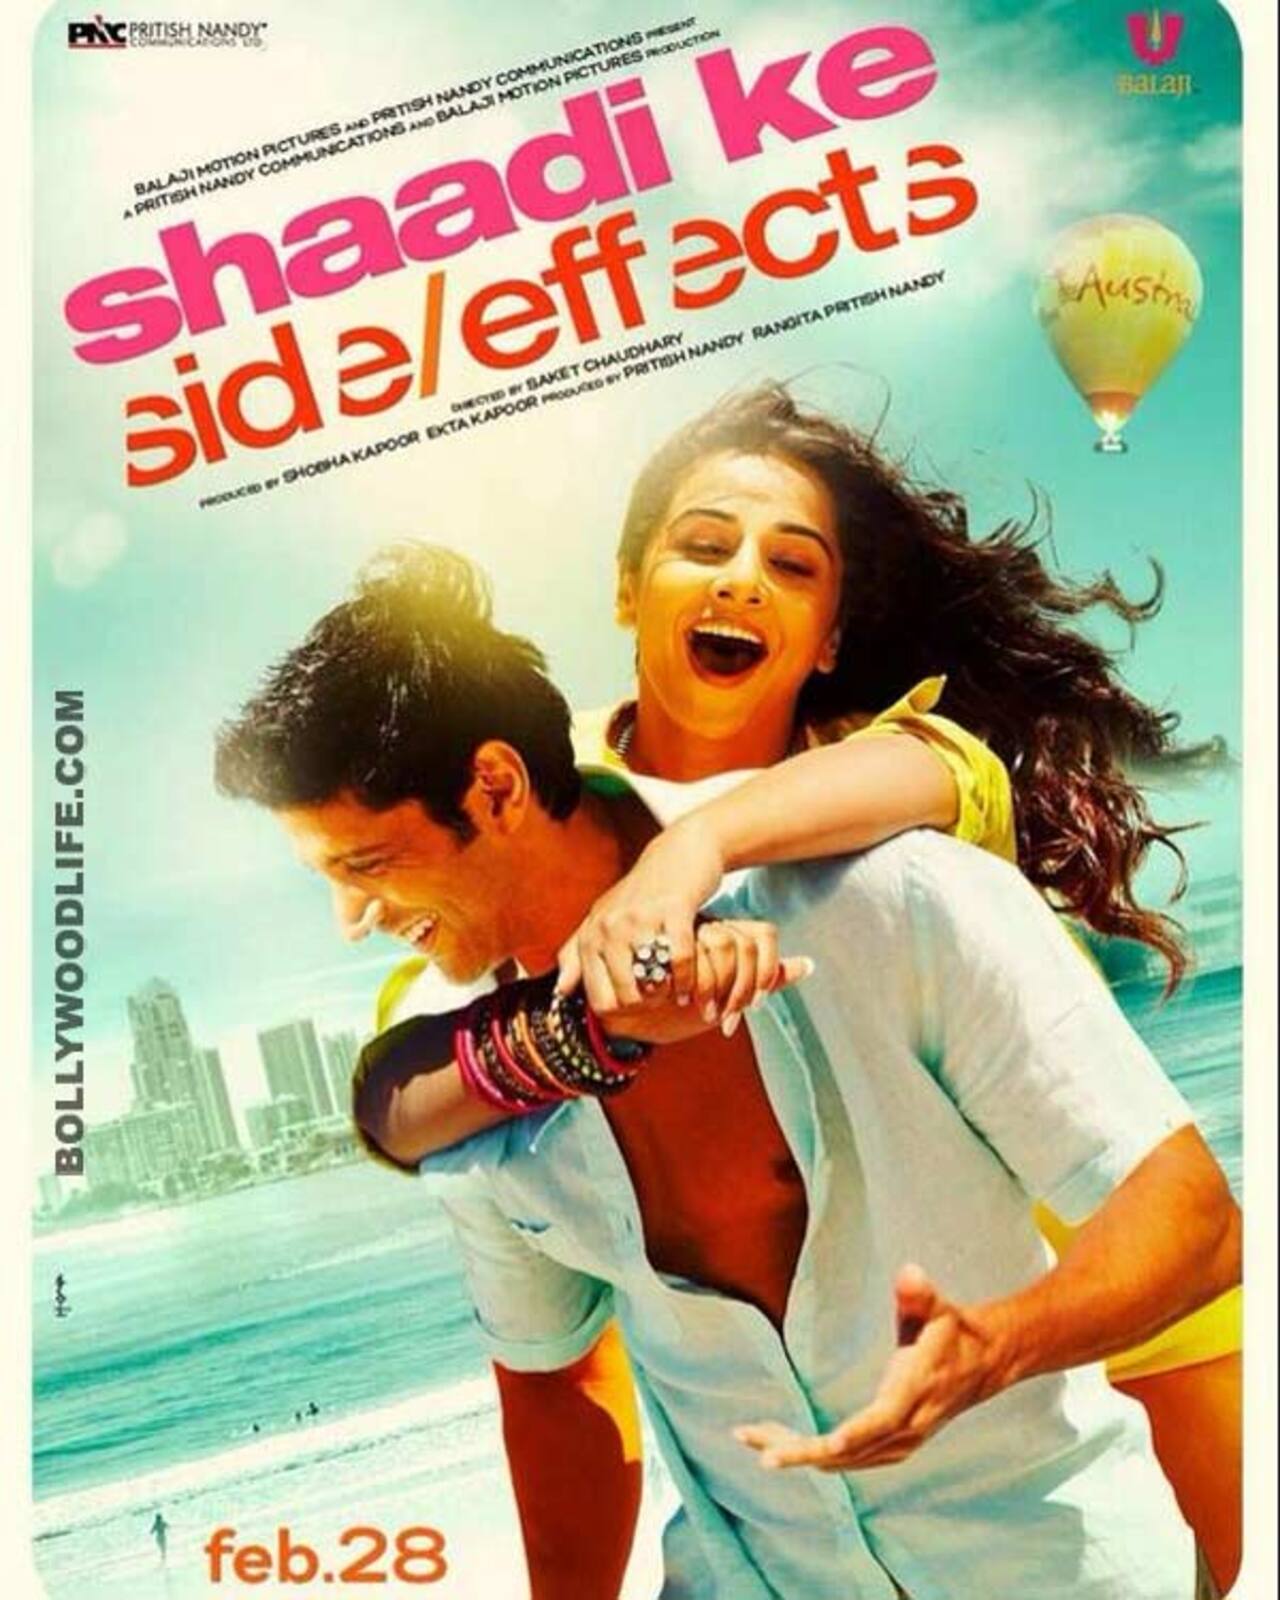 Shaadi Ke Side Effects movie review: Farhan Akhtar and Vidya Balan charm with their parenthood woes!